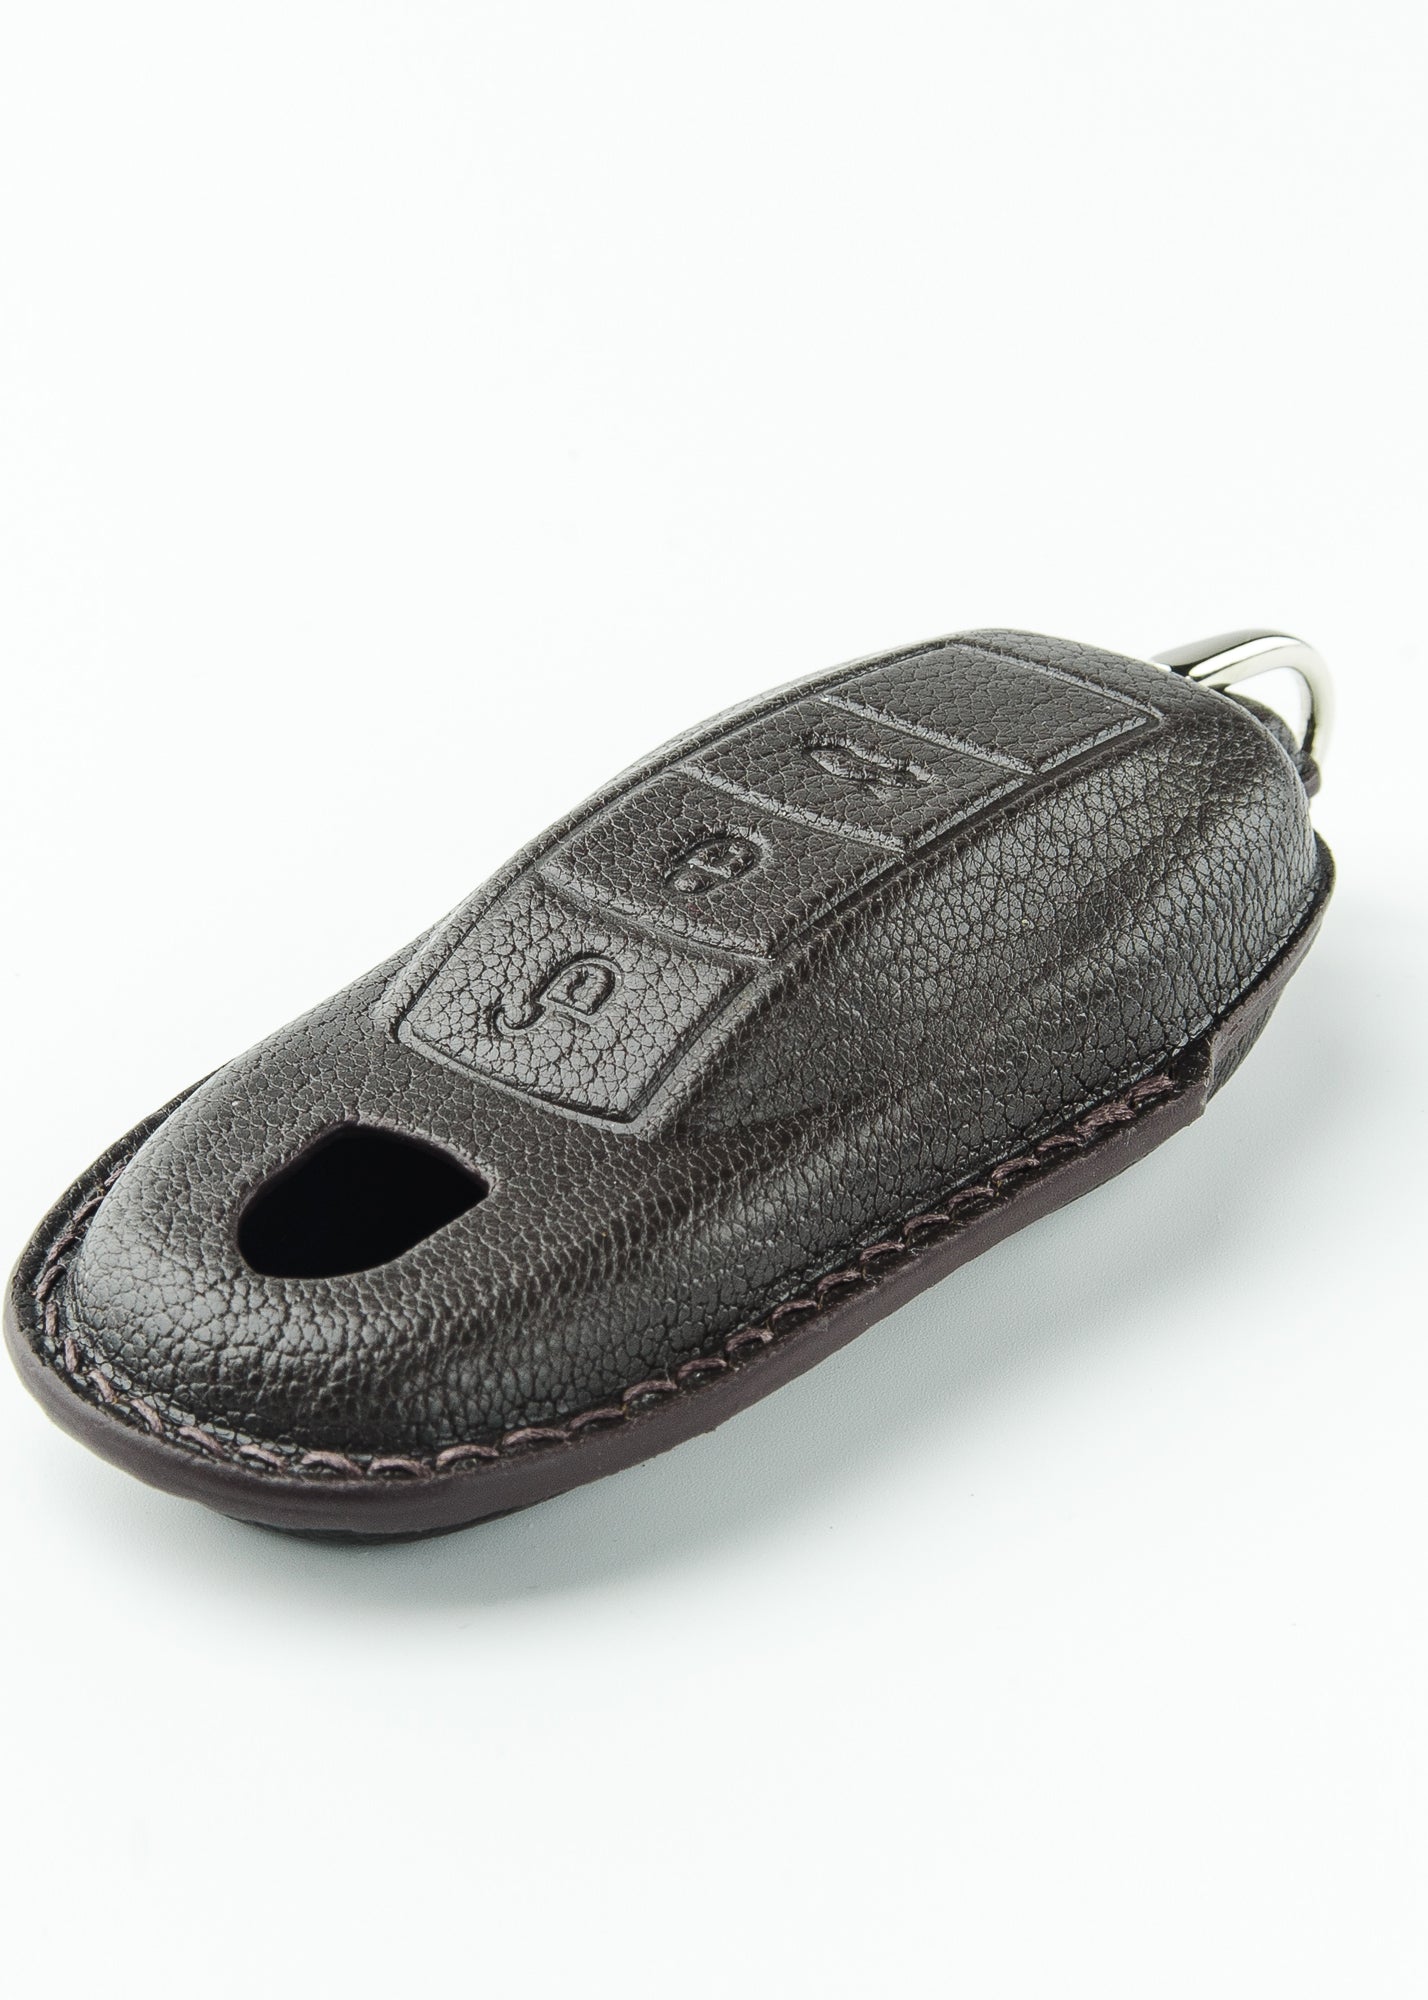 Timotheus for Porsche key fob cover case, Compatible with Porsche key case, Handmade Genuine Leather for Porsche keychains | PR11